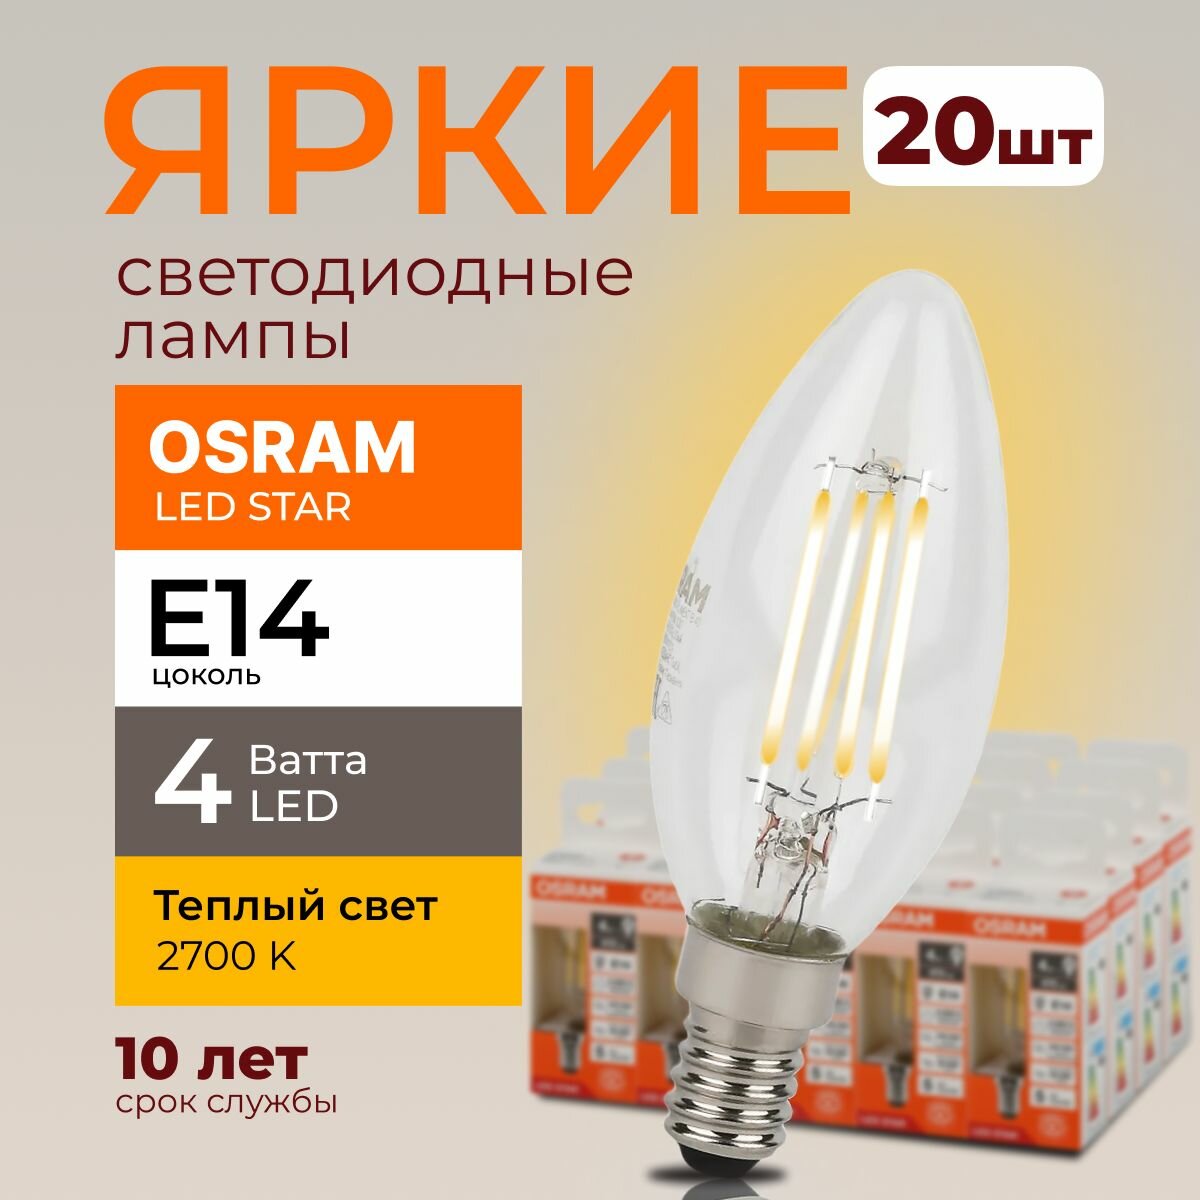 Светодиодная лампочка OSRAM E14 4 Ватт 2700К филаментная теплый белый свет CL свеча 220-240V LED 827, 4W, 470lm, набор 20шт.